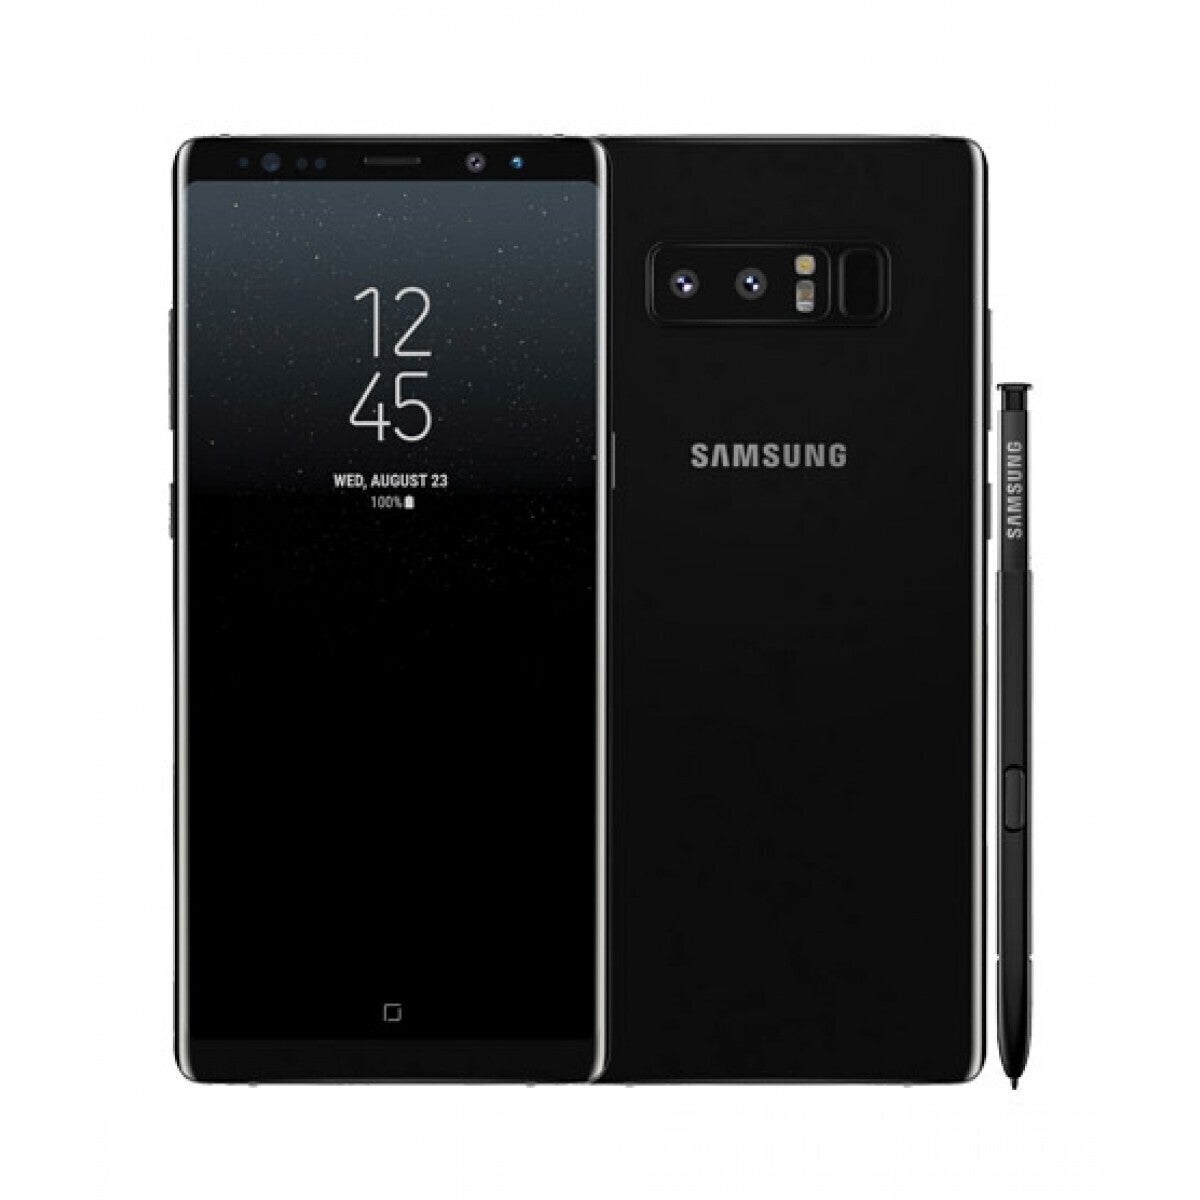 Samsung Galaxy Note 8 64GB Midnight Black (N950) - Excellent (Refurbished)